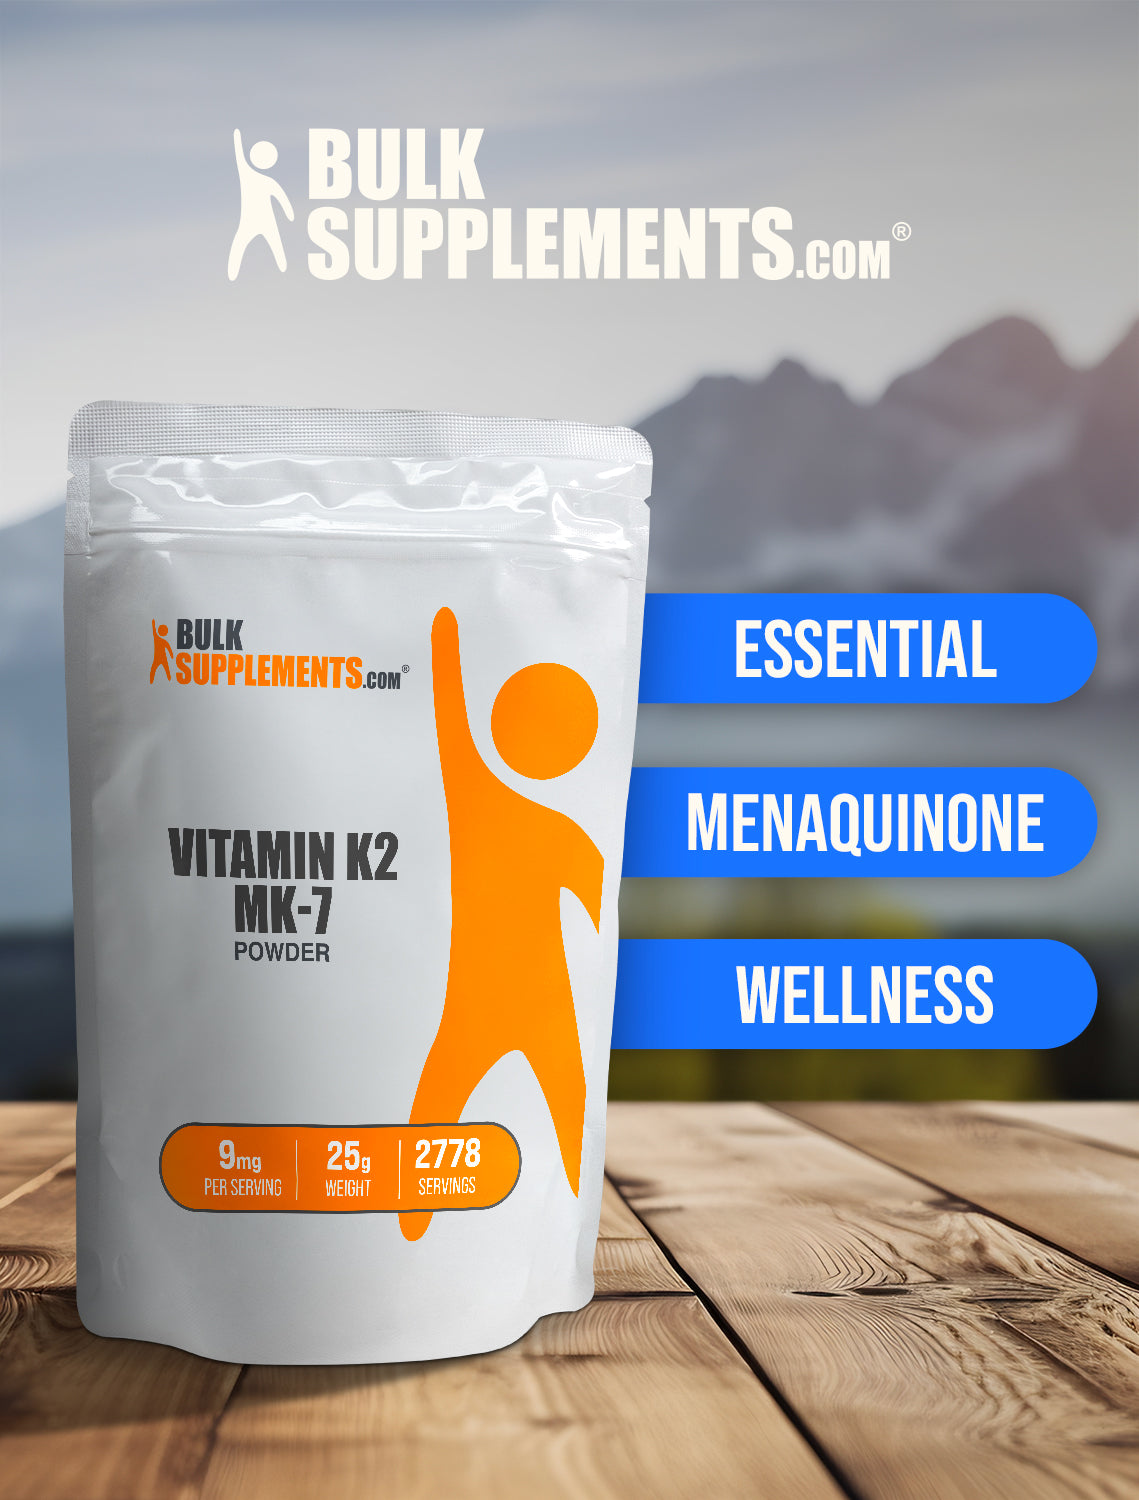 Vitamin K2 MK-7 powder keyword image 25g